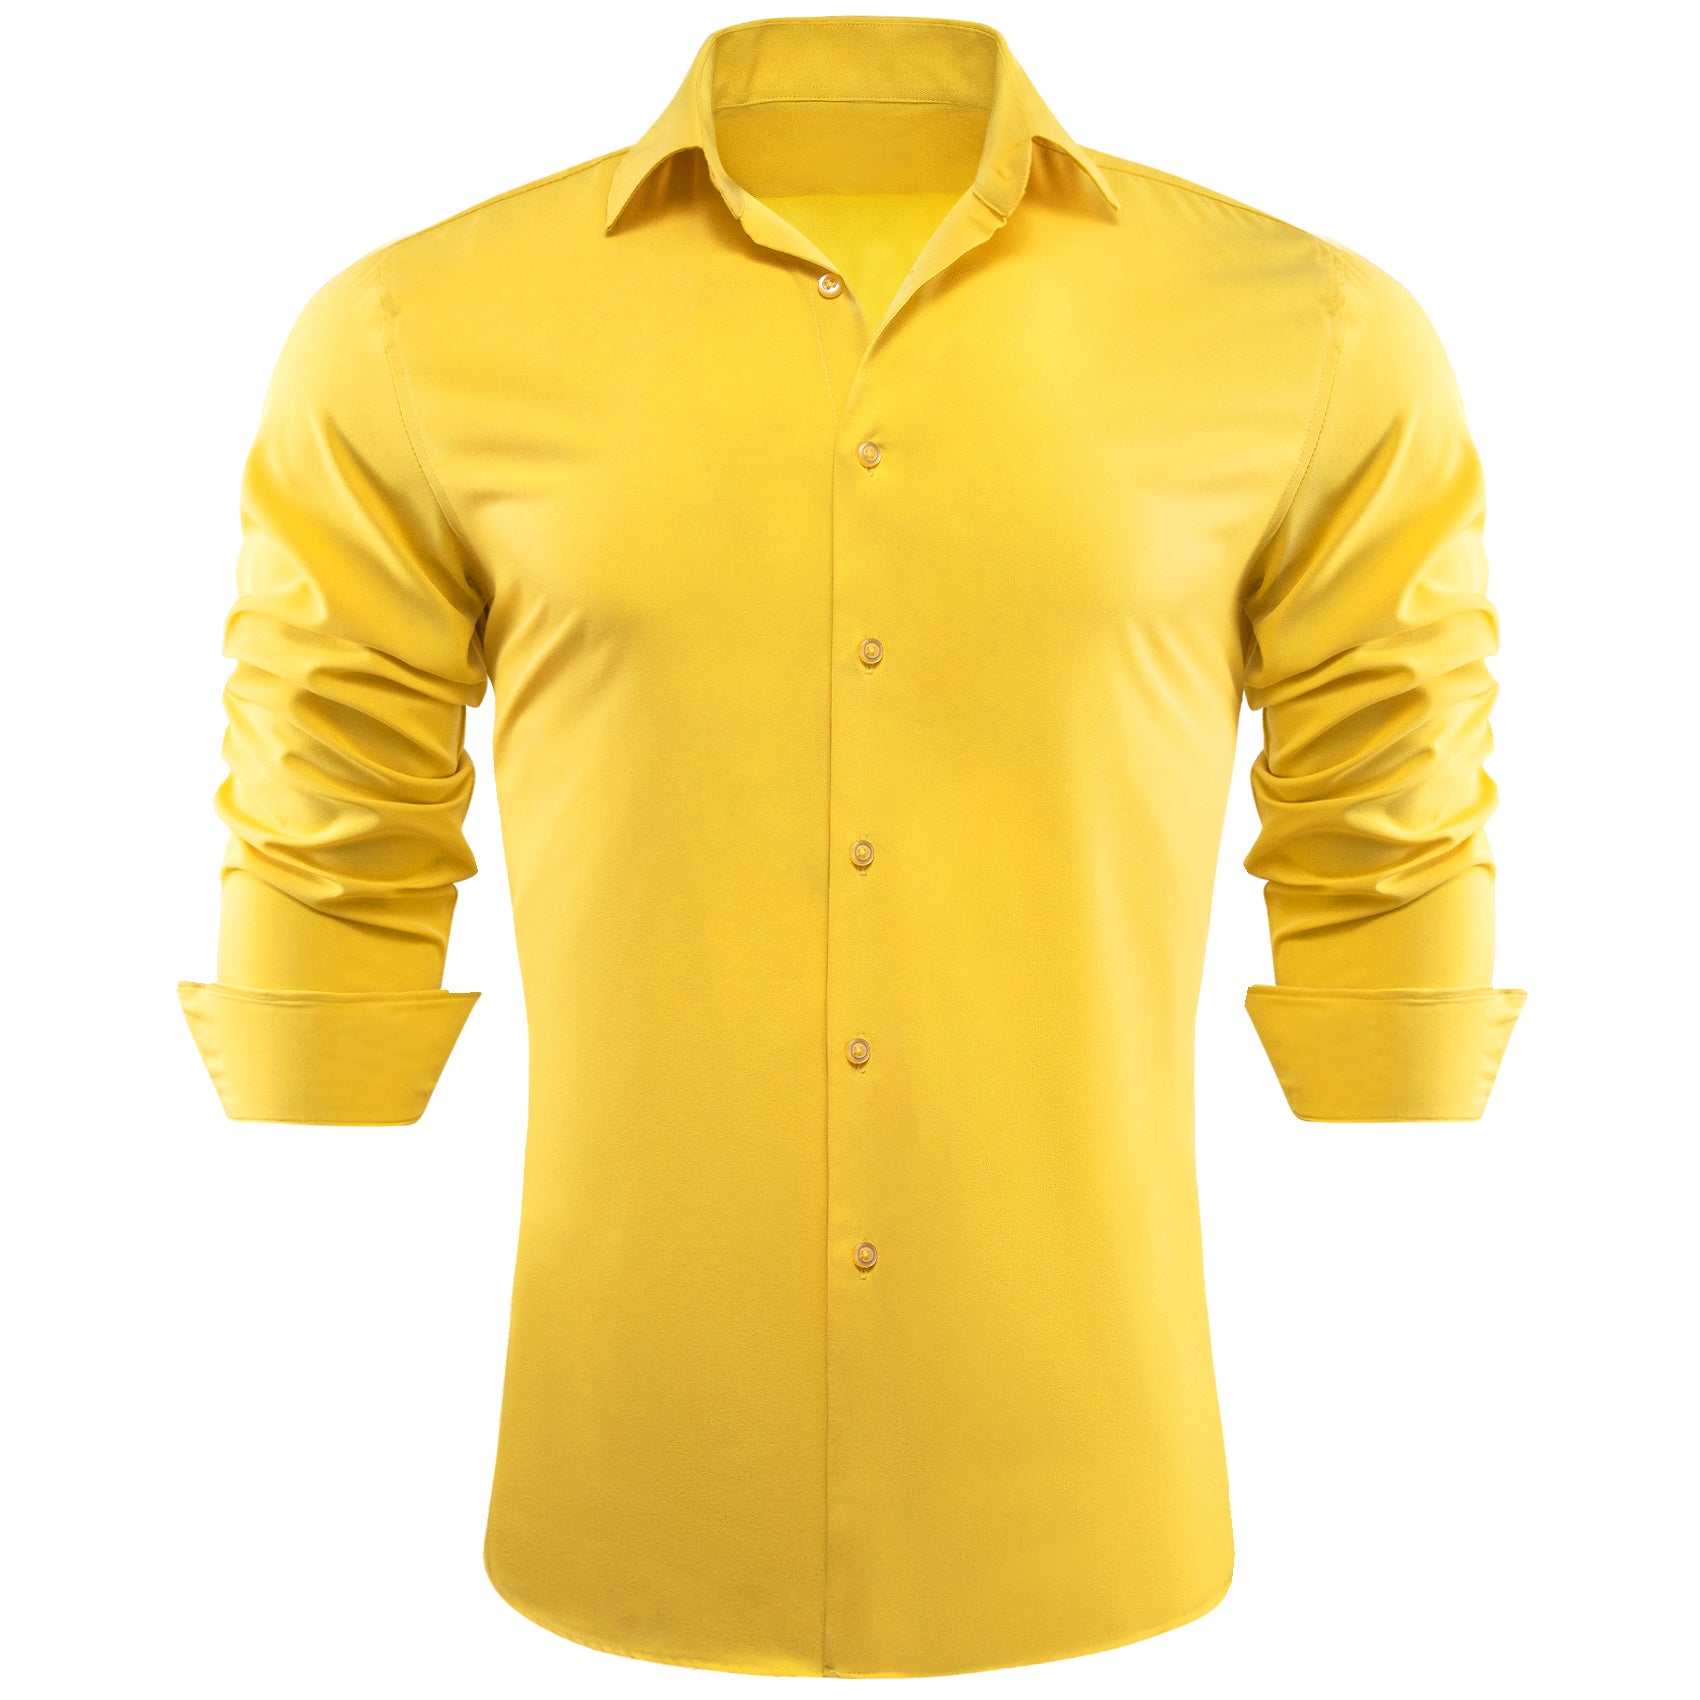 Barry.wang Button Down Shirt Bright Yellow Solid Silk Men's Long Sleeve Shirt